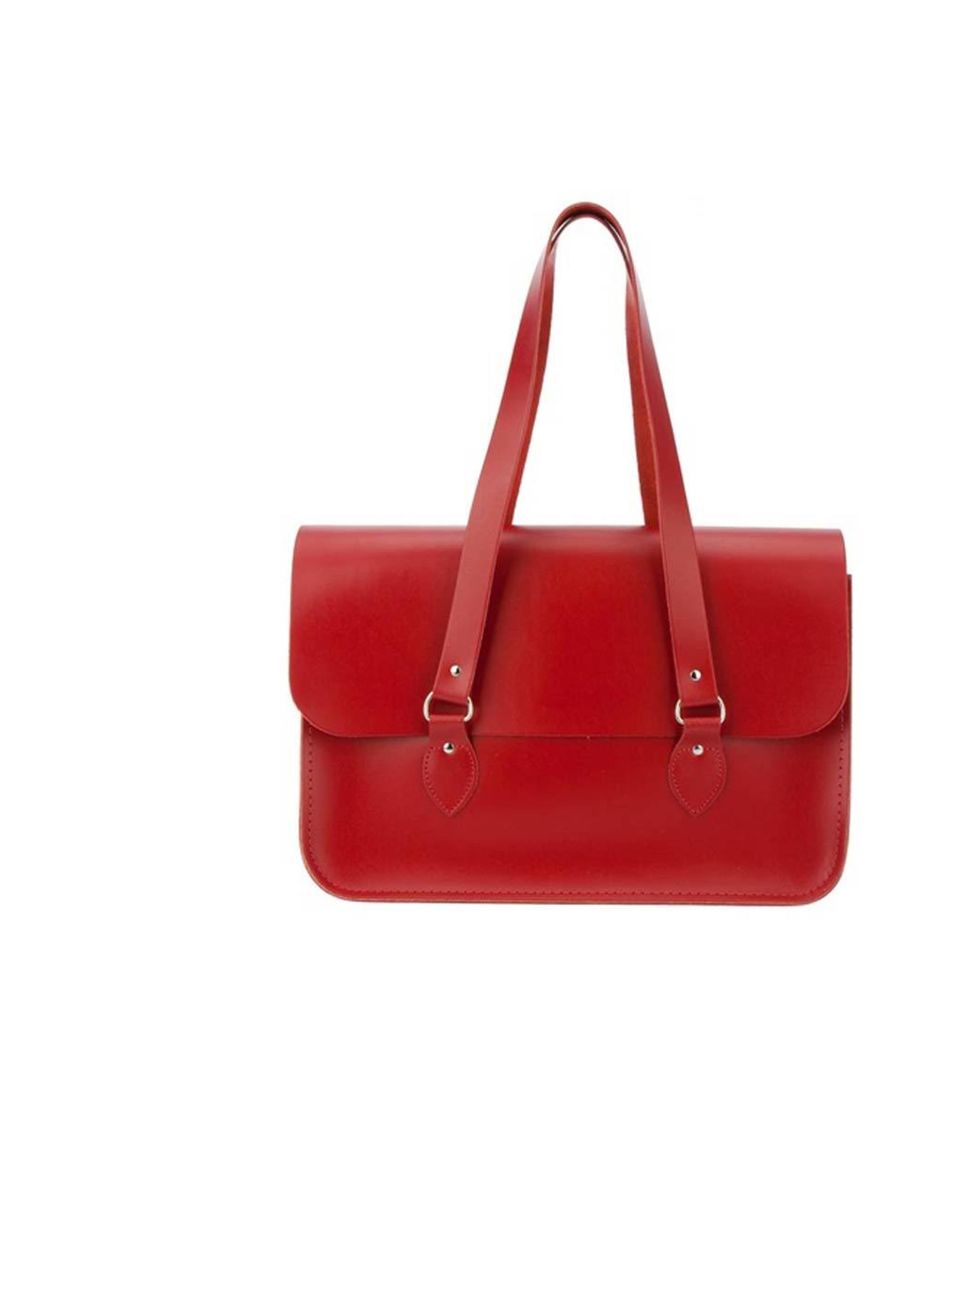 <p>Scarlet red leather Comme Des Garcons satchel, £244.58 at<a href="http://www.farfetch.com/shopping/women/251057-designer-comme-des-garcons-comme-des-garcons-large-satchel-item-10239461.aspx"> Farfetch.com</a></p>